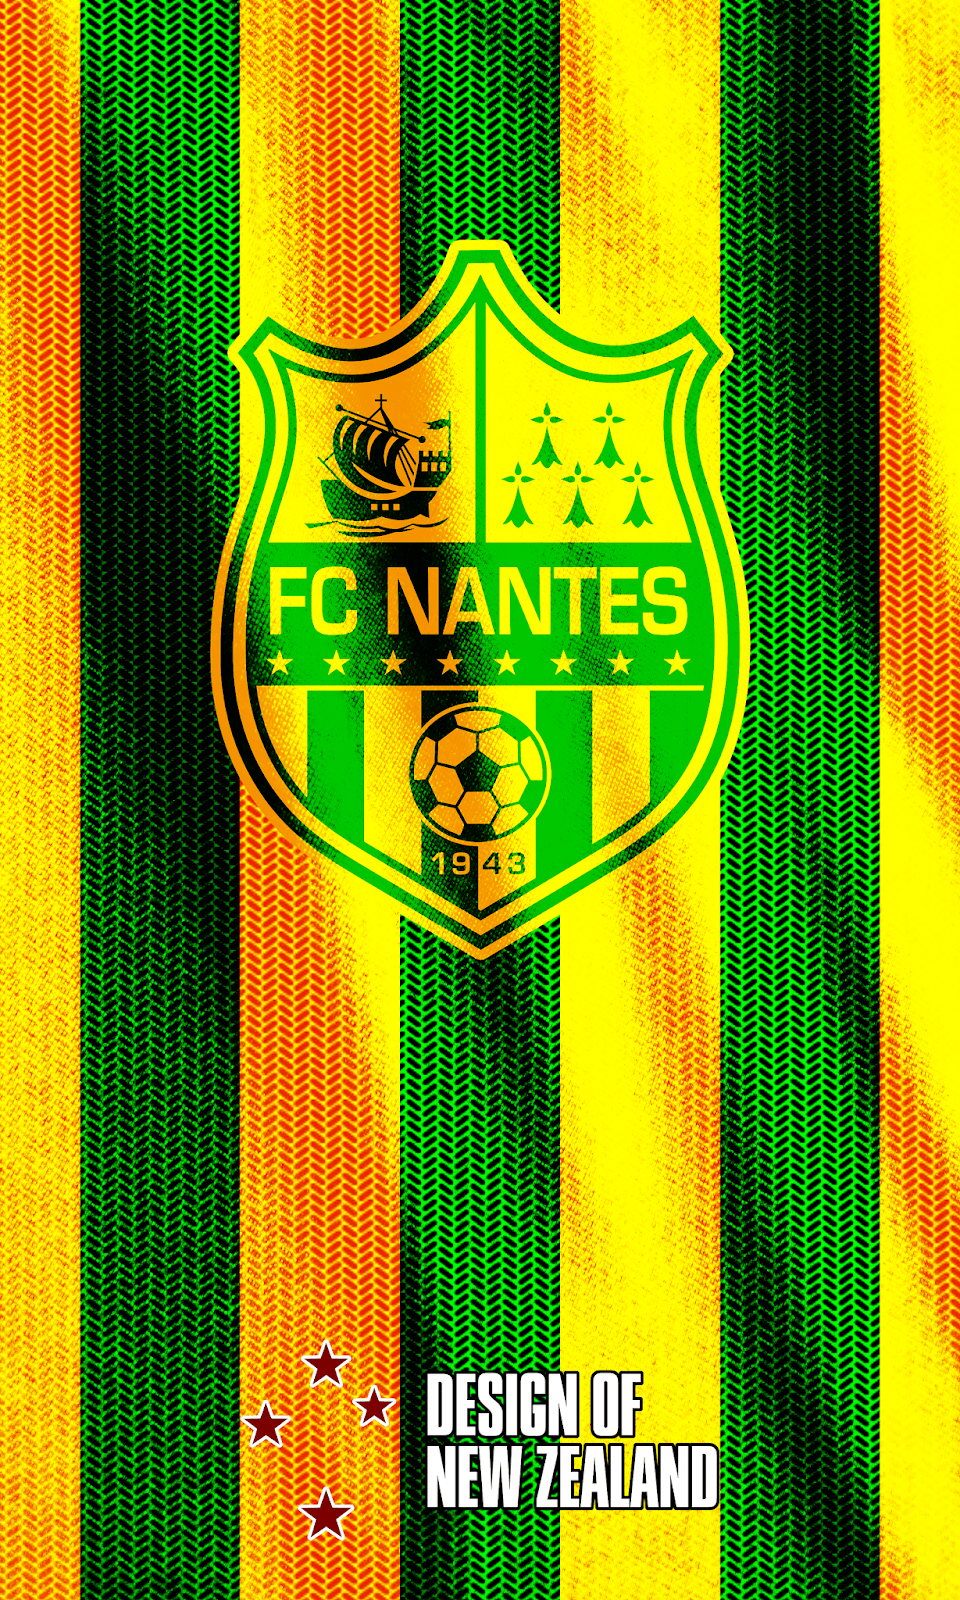 Wallpaper FC Nantes. The Football Illustrated, Inc. Nantes